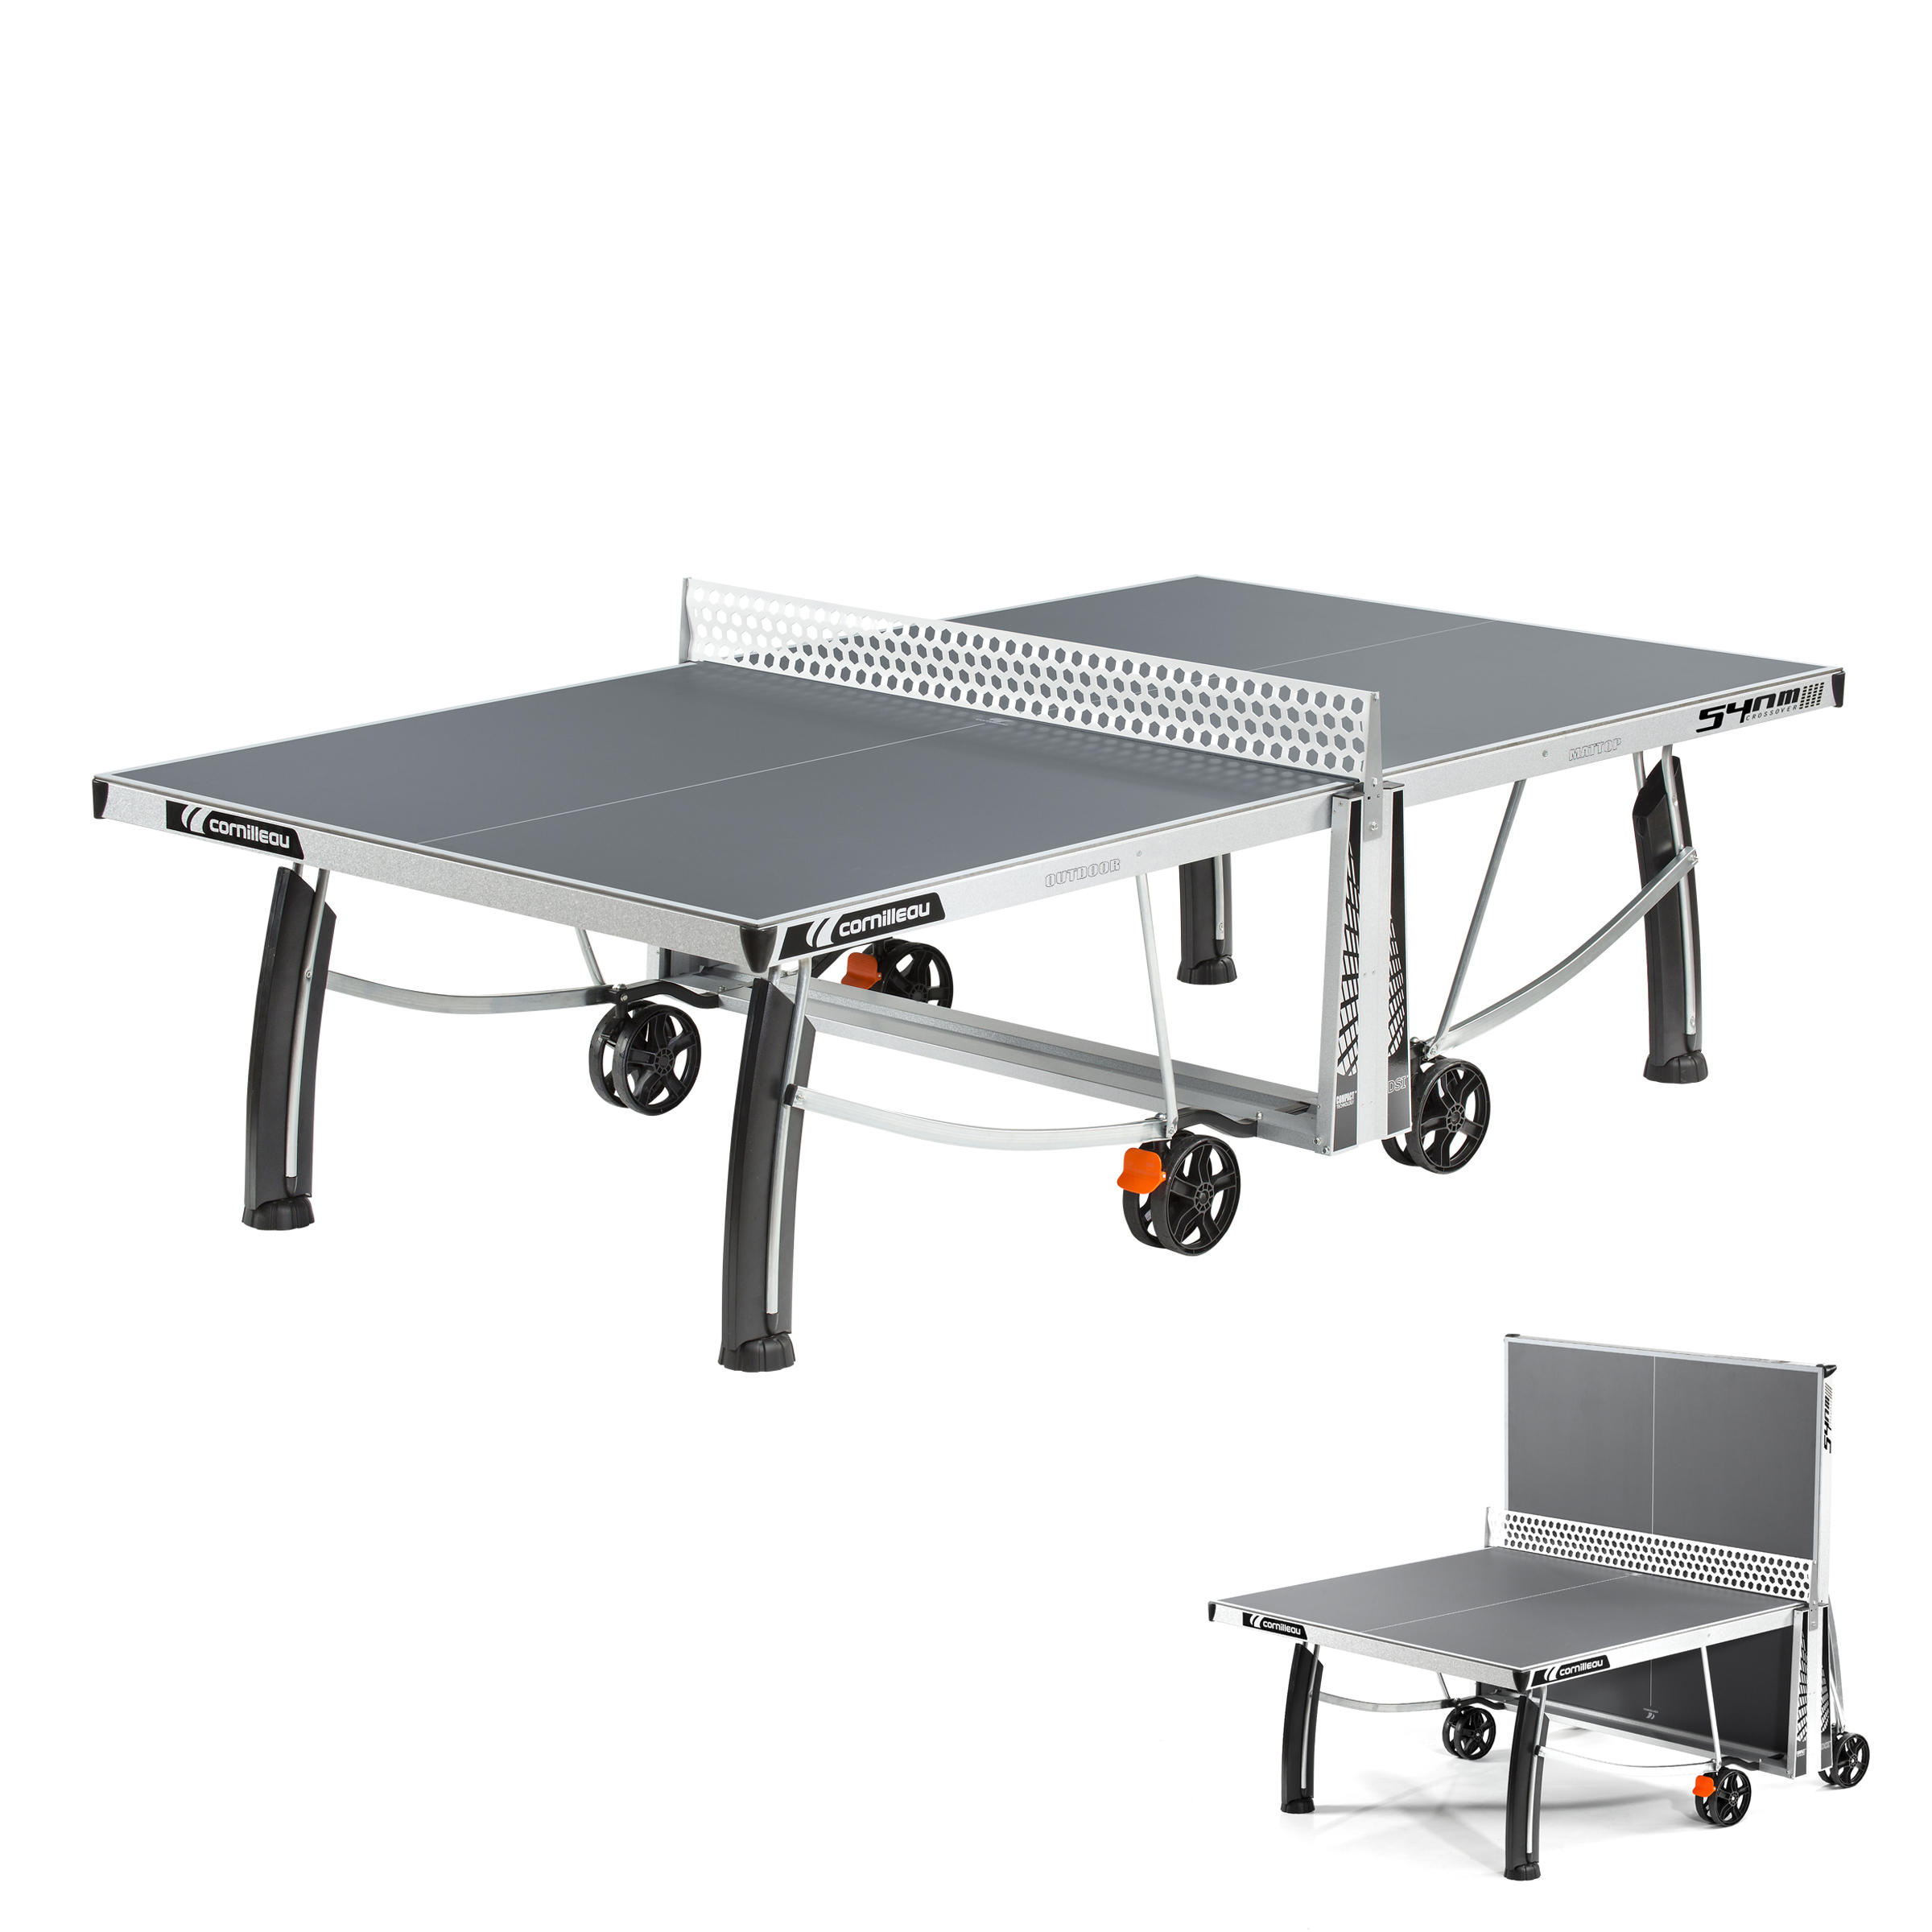 decathlon table tennis table outdoor